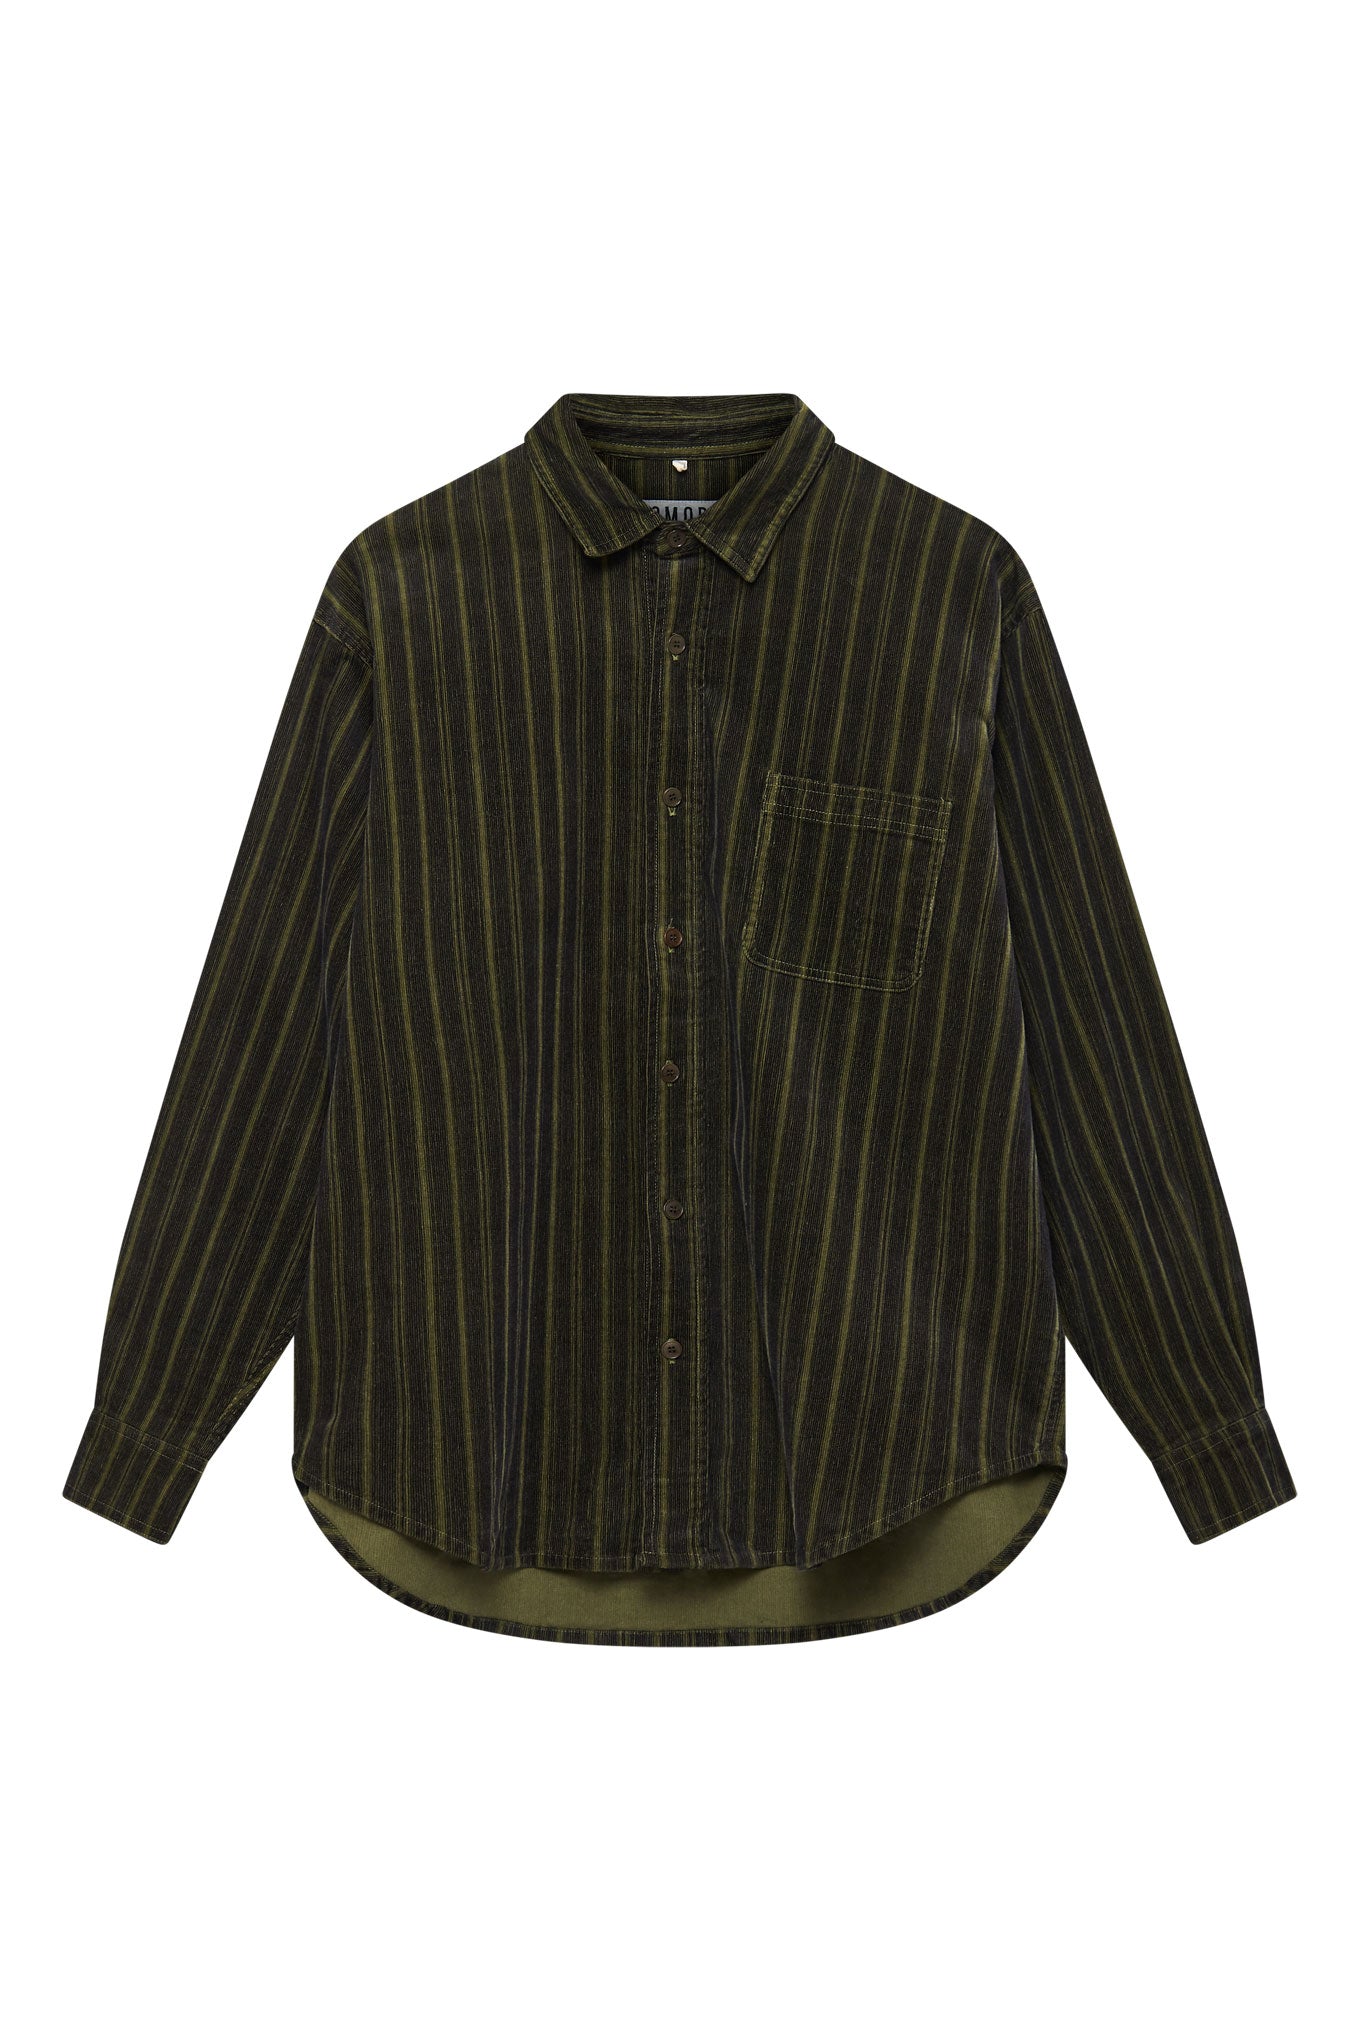 JAX - Organic Cotton Cord Shirt Black Stripe